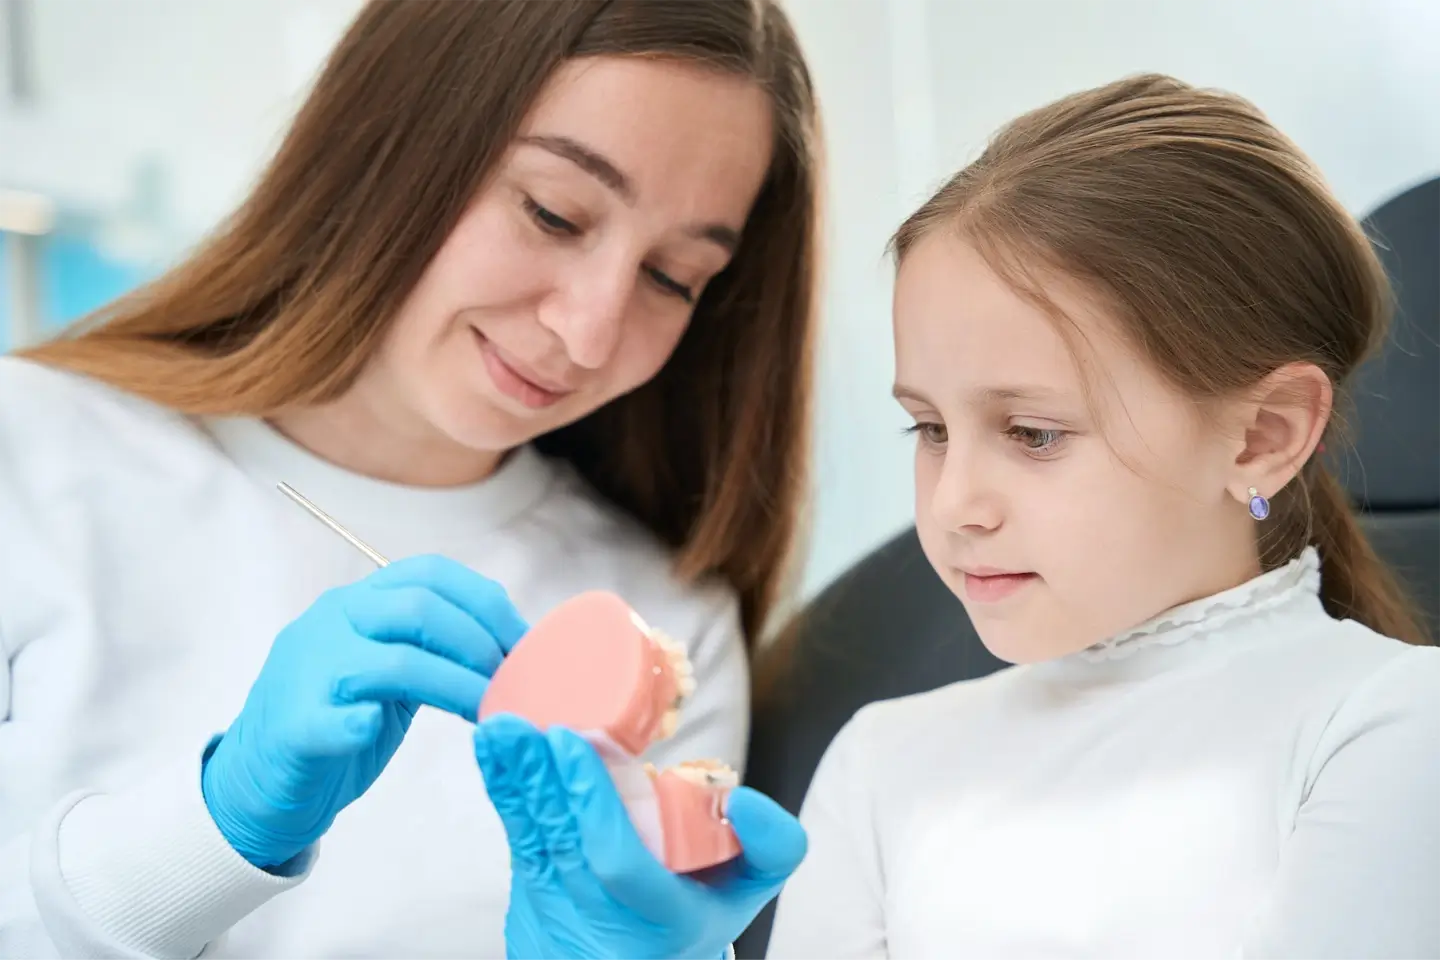 Pediatric dentist explaining teeth examination procedure to young patient